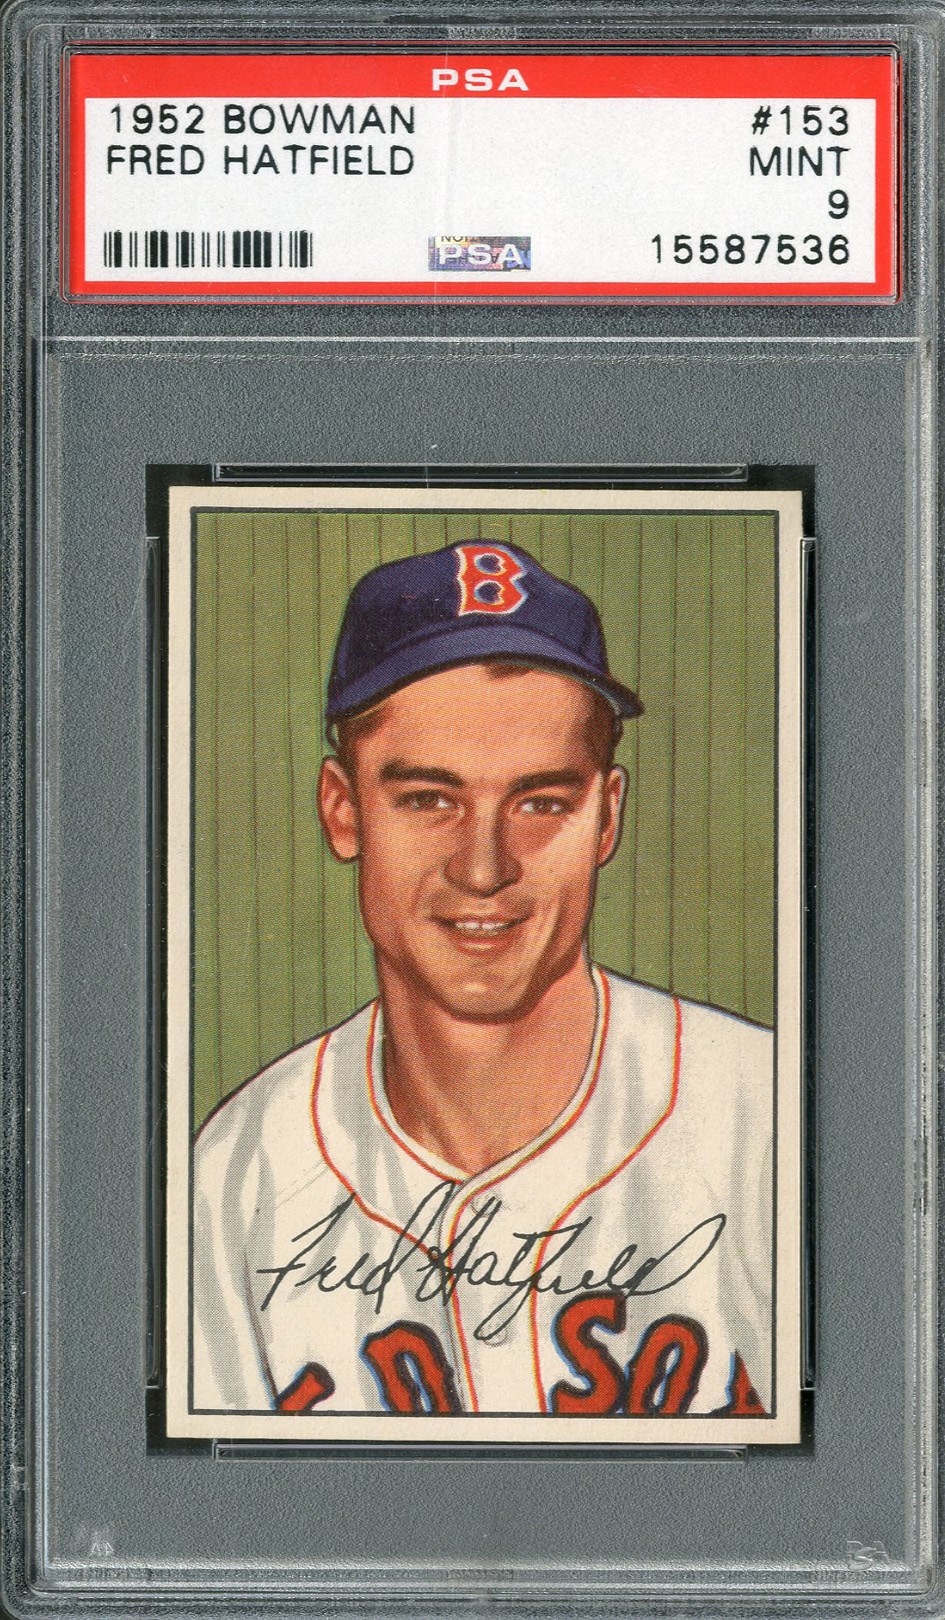 Baseball and Trading Cards - 1952 Bowman #153 Fred Hatfield PSA MINT 9